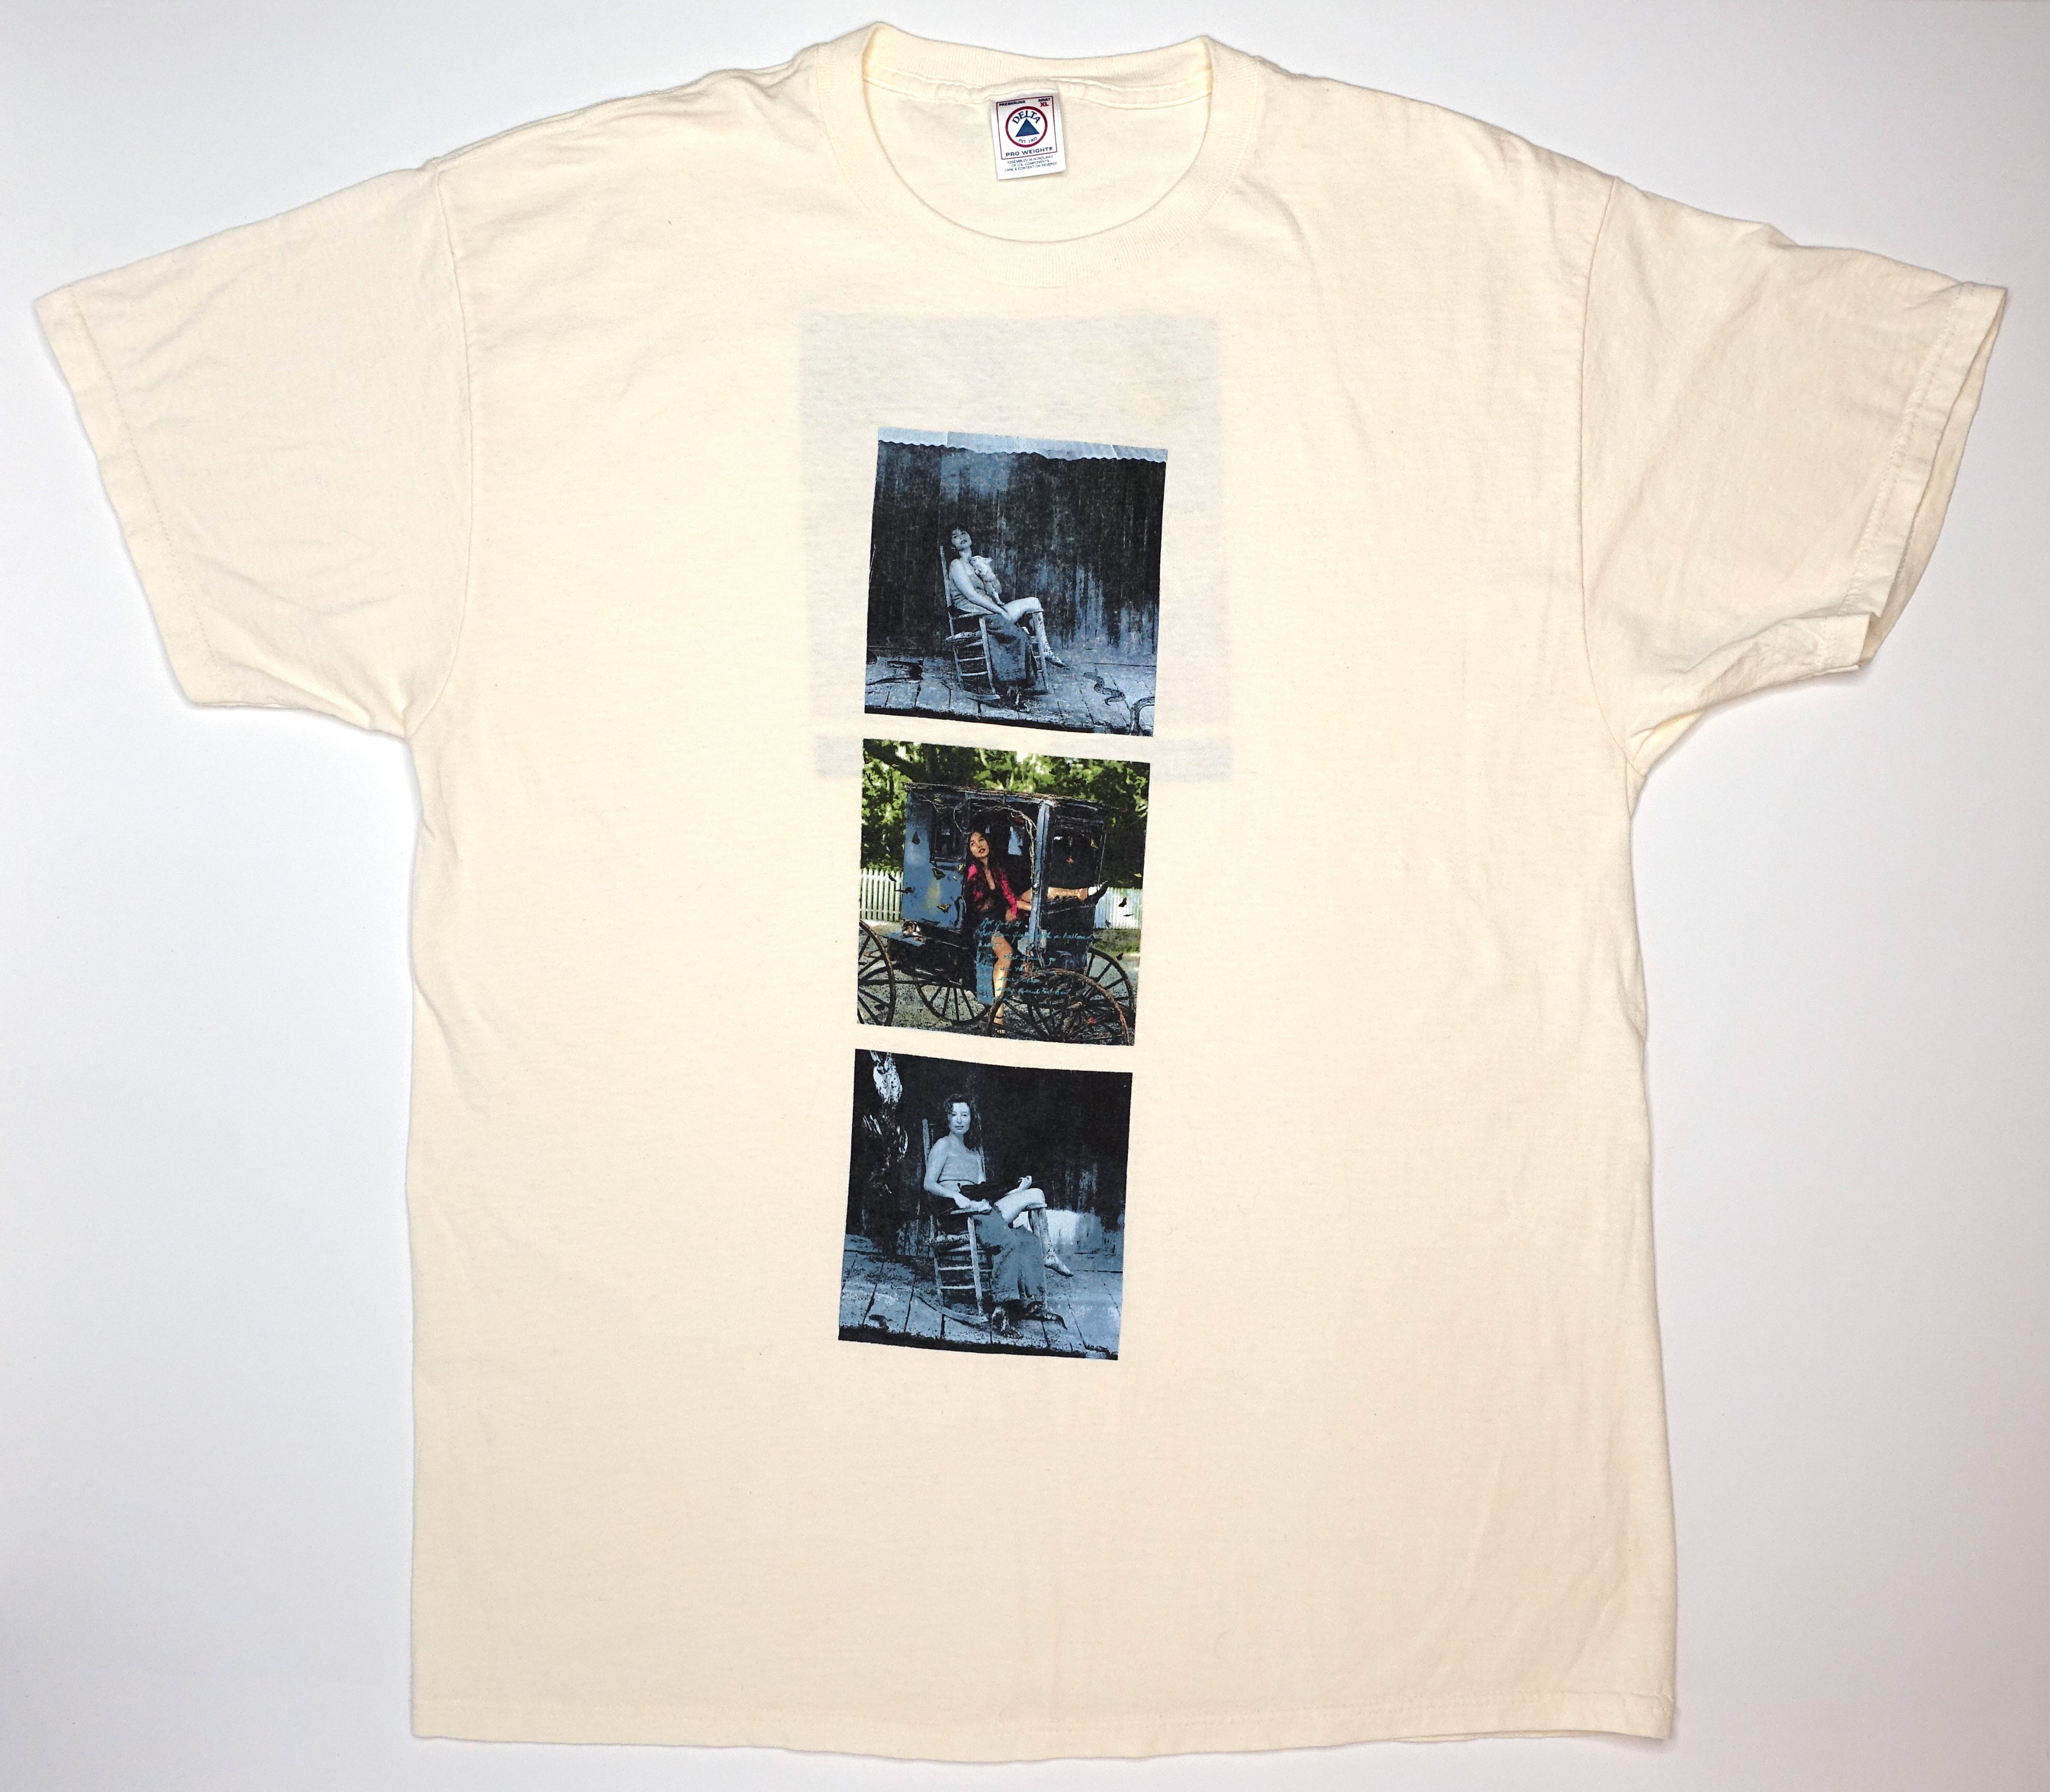 Tori Amos - Boys For Pele 1996 Tour Shirt Size XL